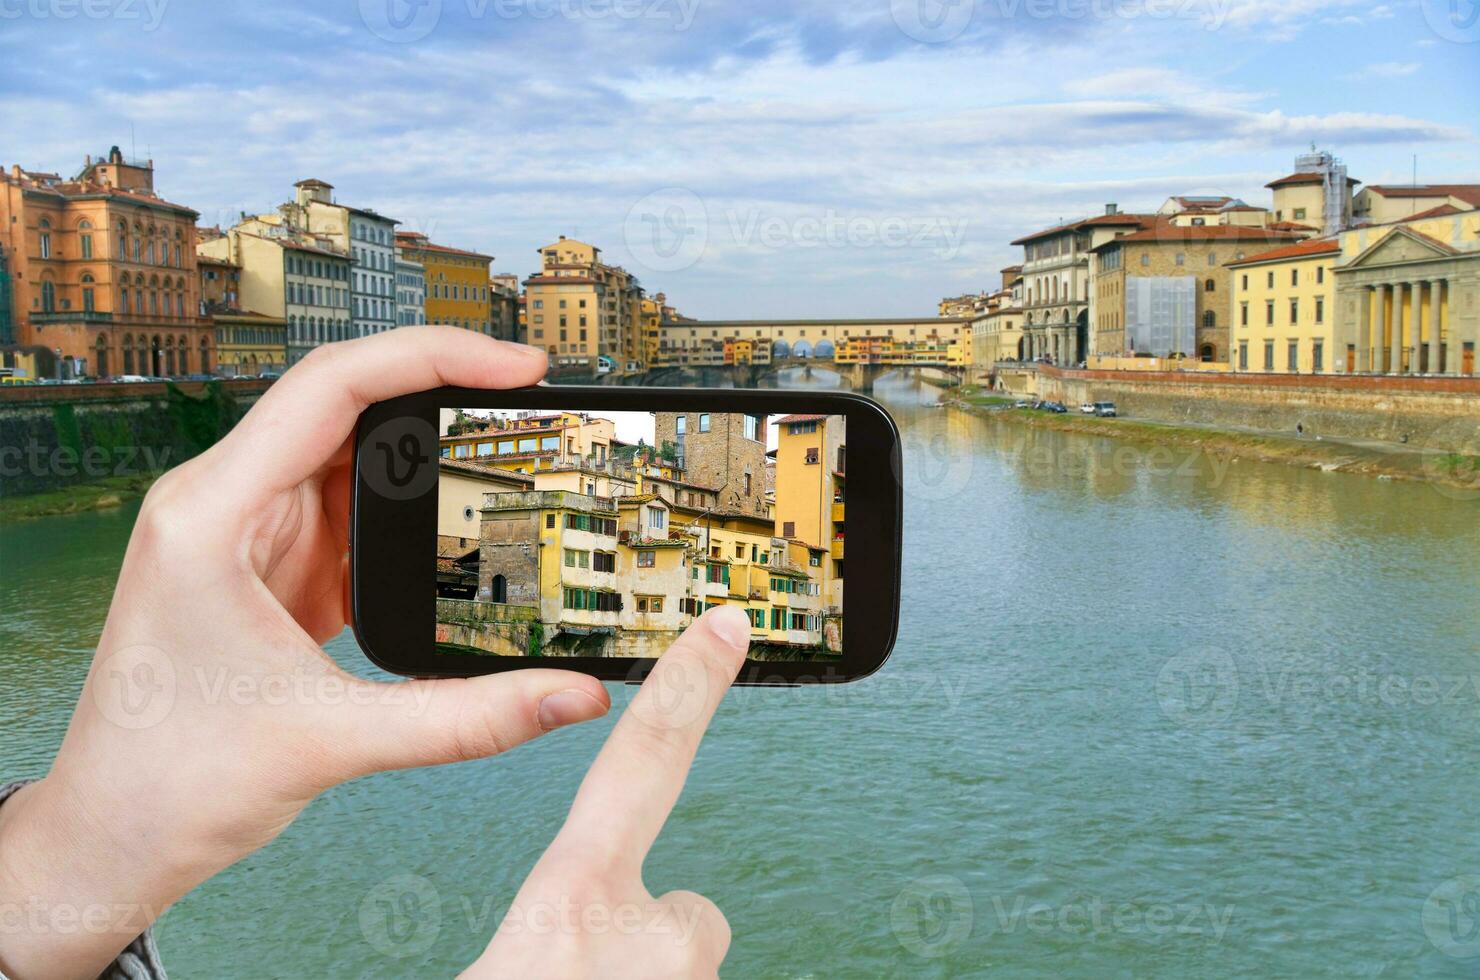 turista tirando foto ponte vecchio no rio arno